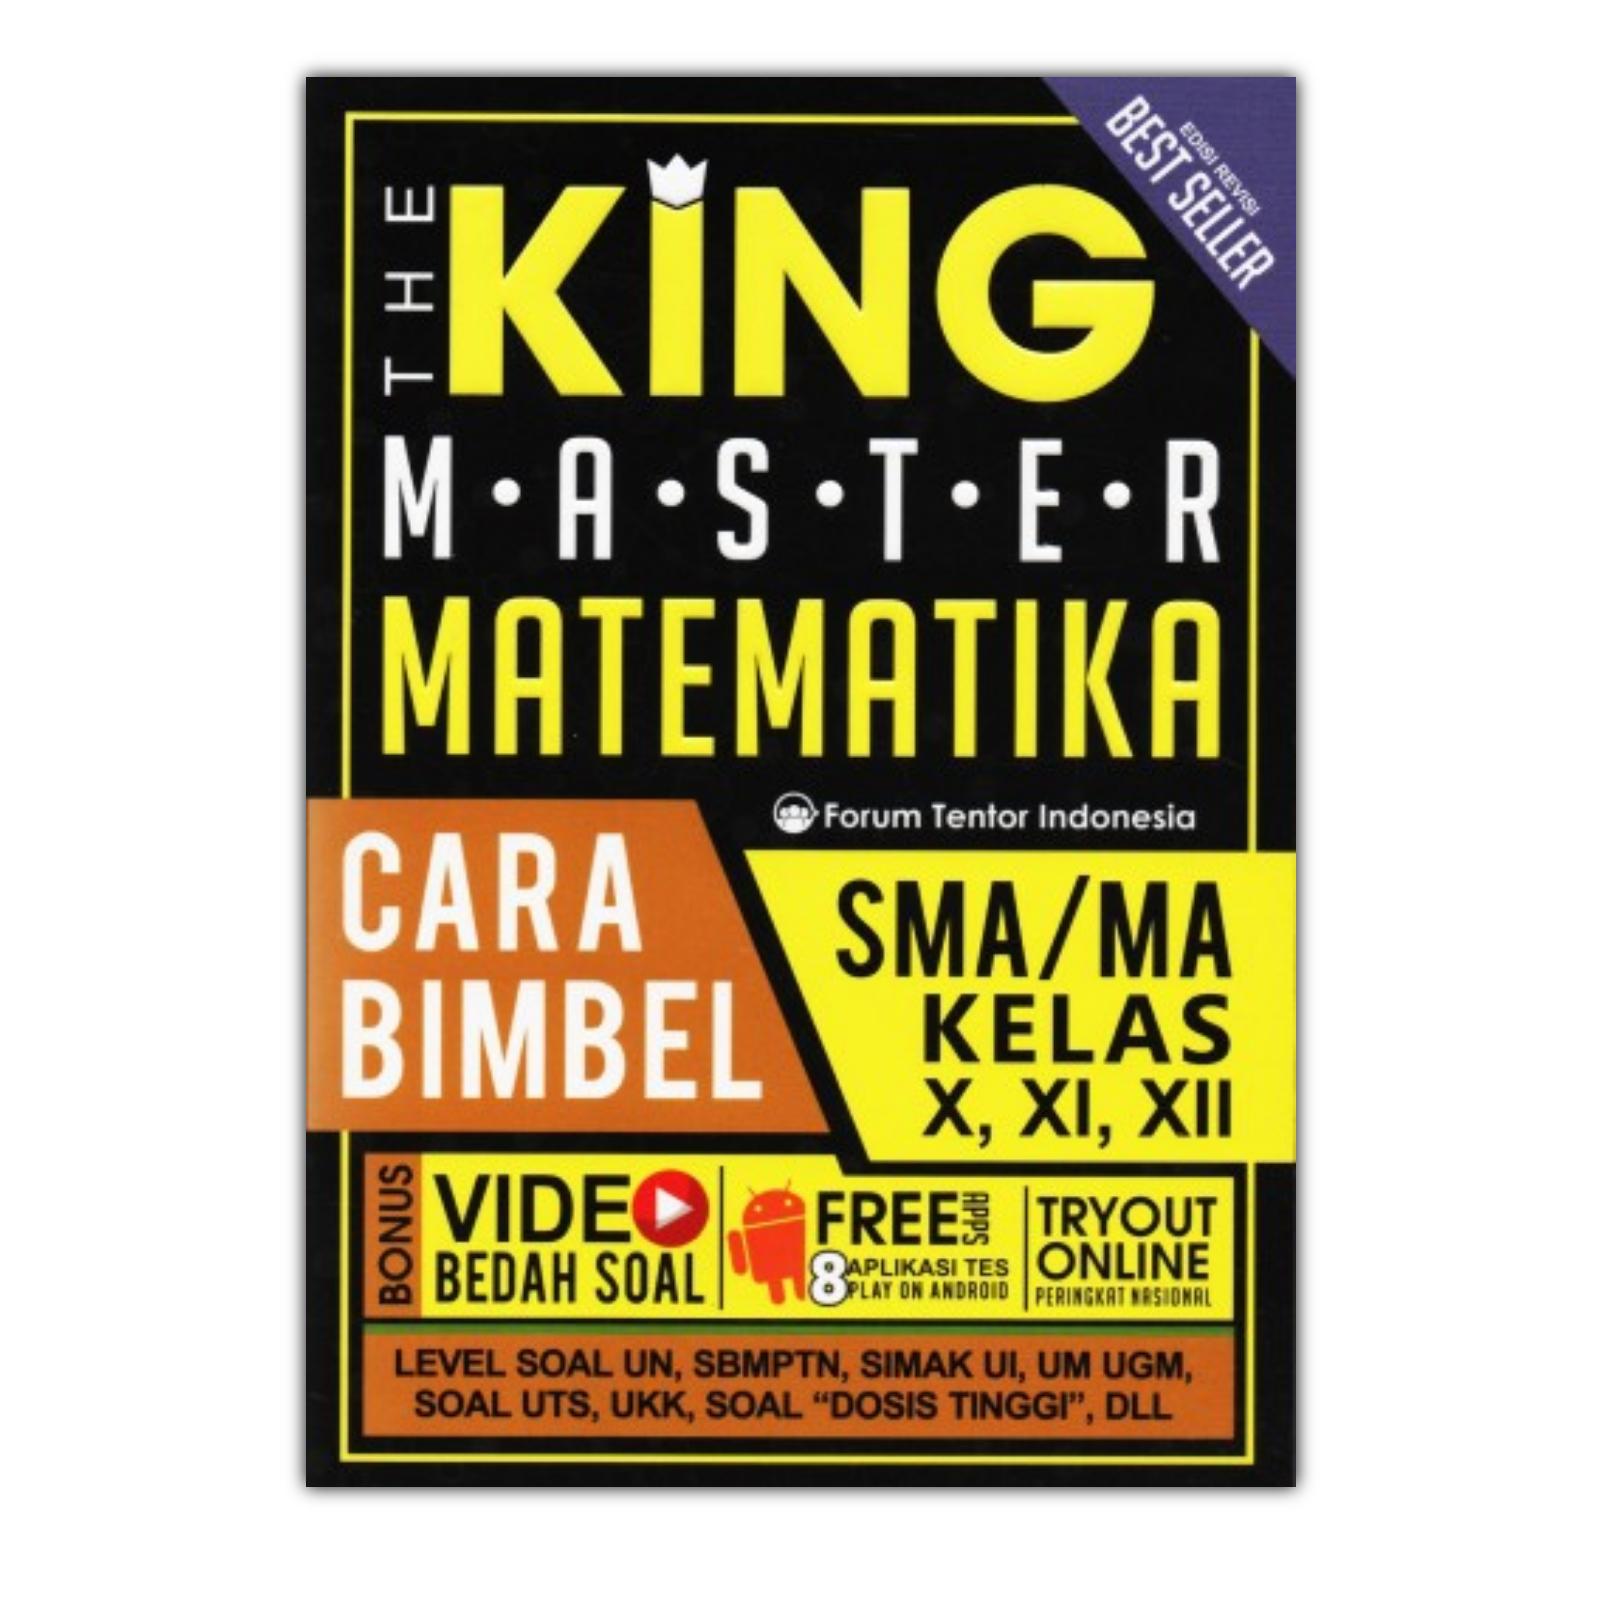 SMA MA THE KING MASTER MATEMATIKA CARA BIMBEL KELAS 10 11 12